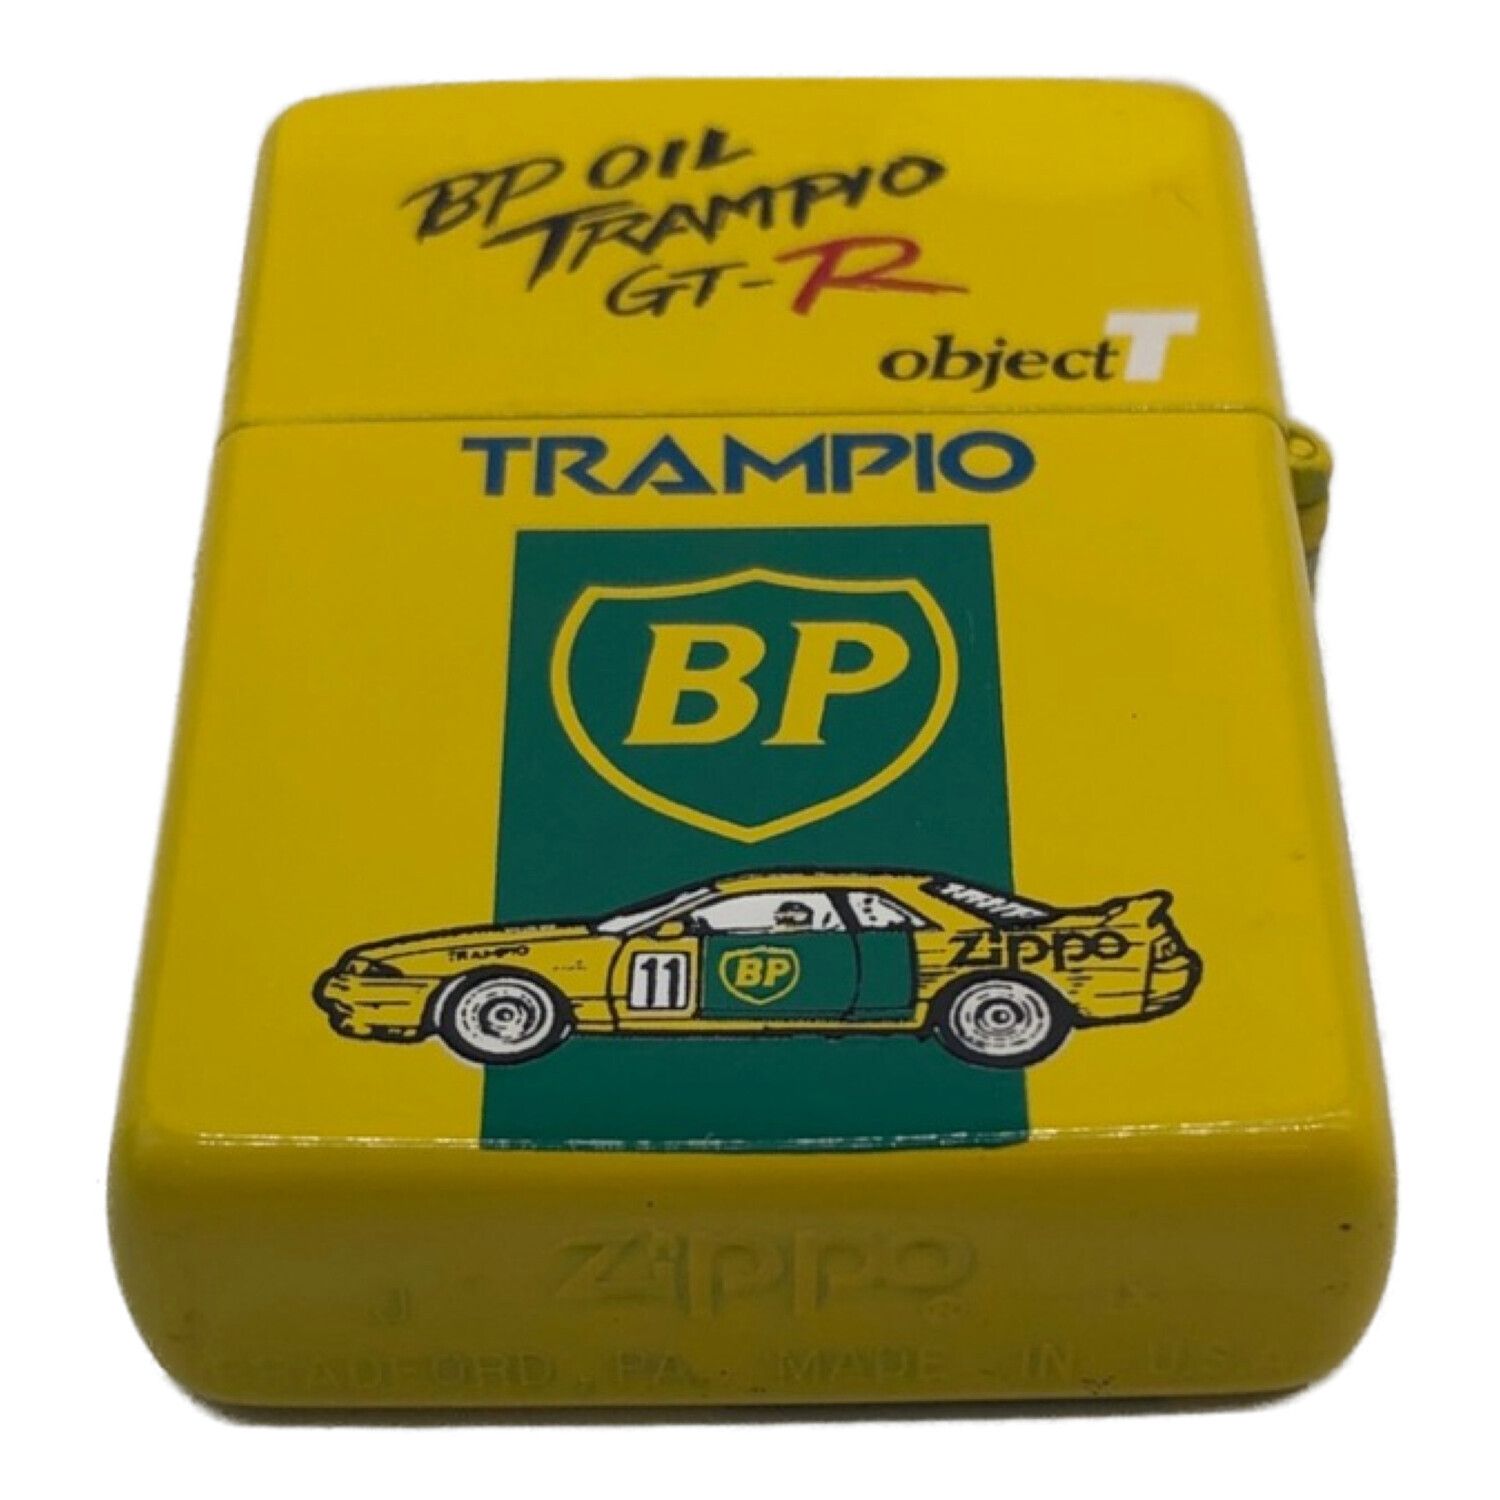 1988年製 zippo BP GT-R TRAMPIO